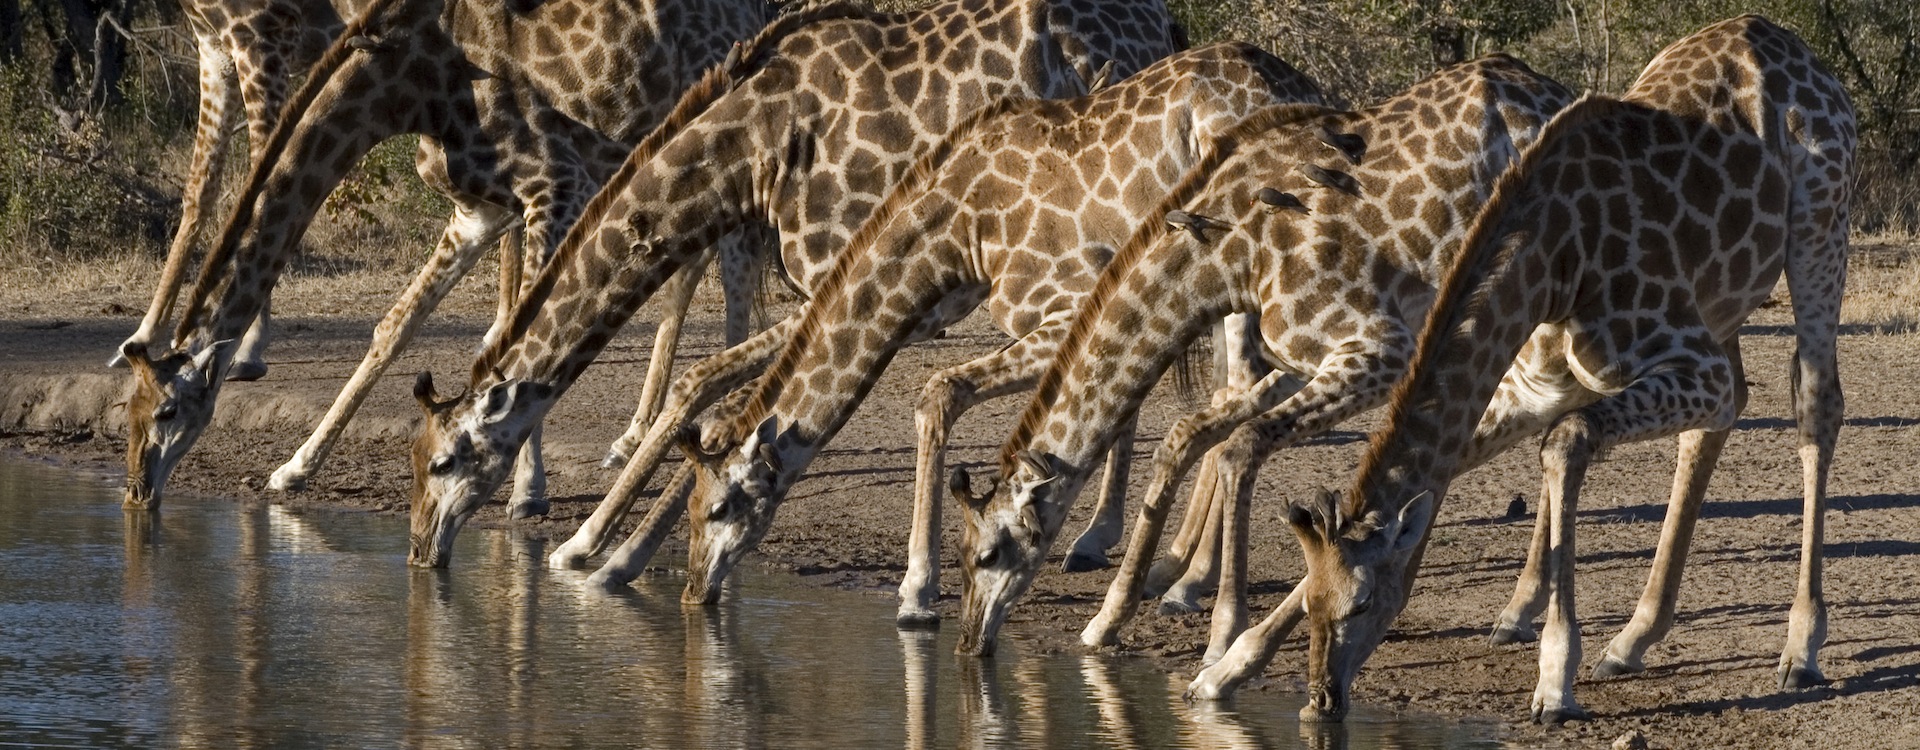 Marvel at Africa's astonishing wildlife